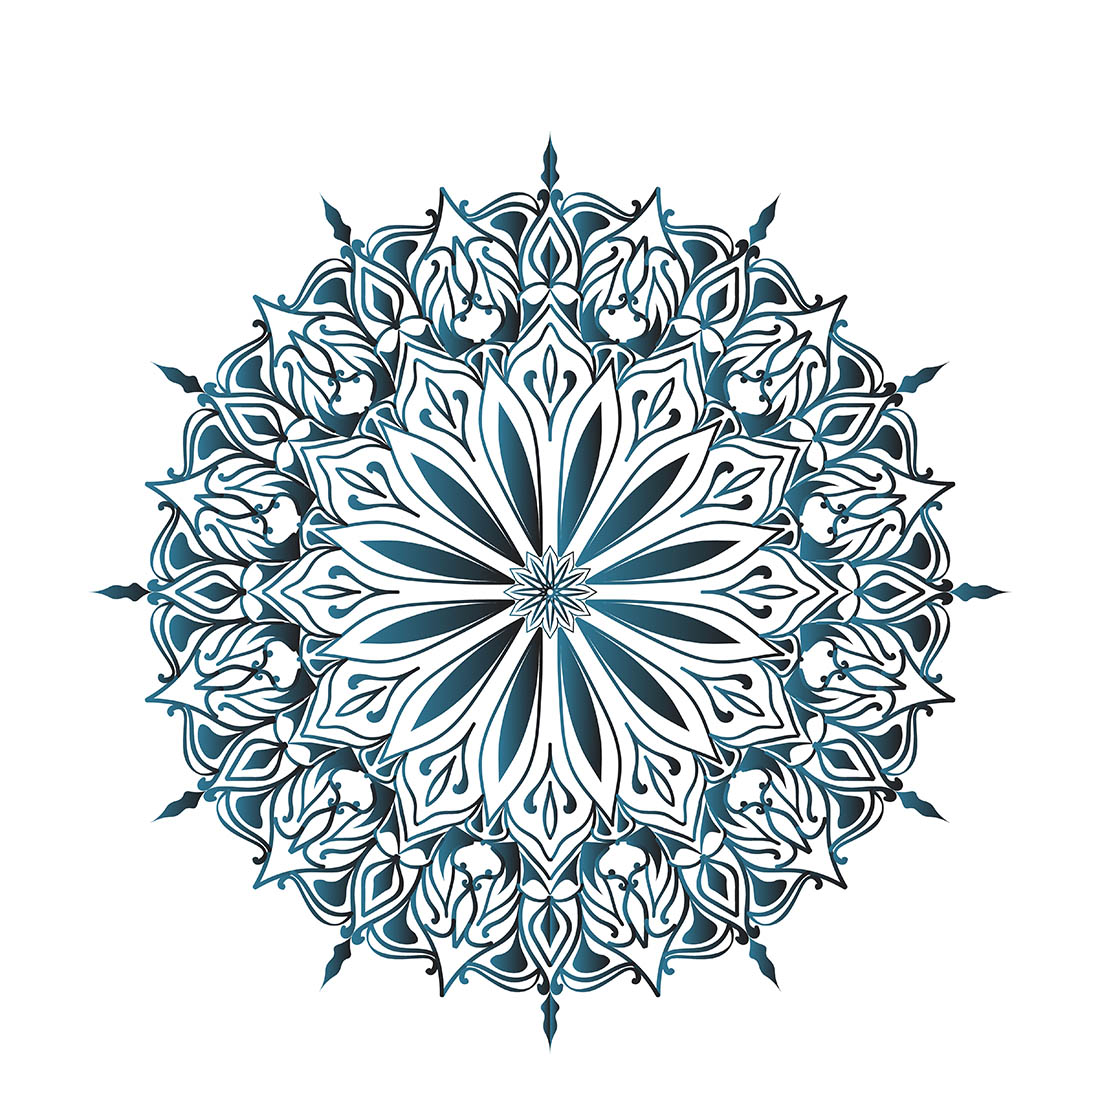 How to draw a Mandala | 75 Simple Mandala Drawing Ideas and Designs -  HERCOTTAGE | Mandala drawing, Mandala design art, Colorful art